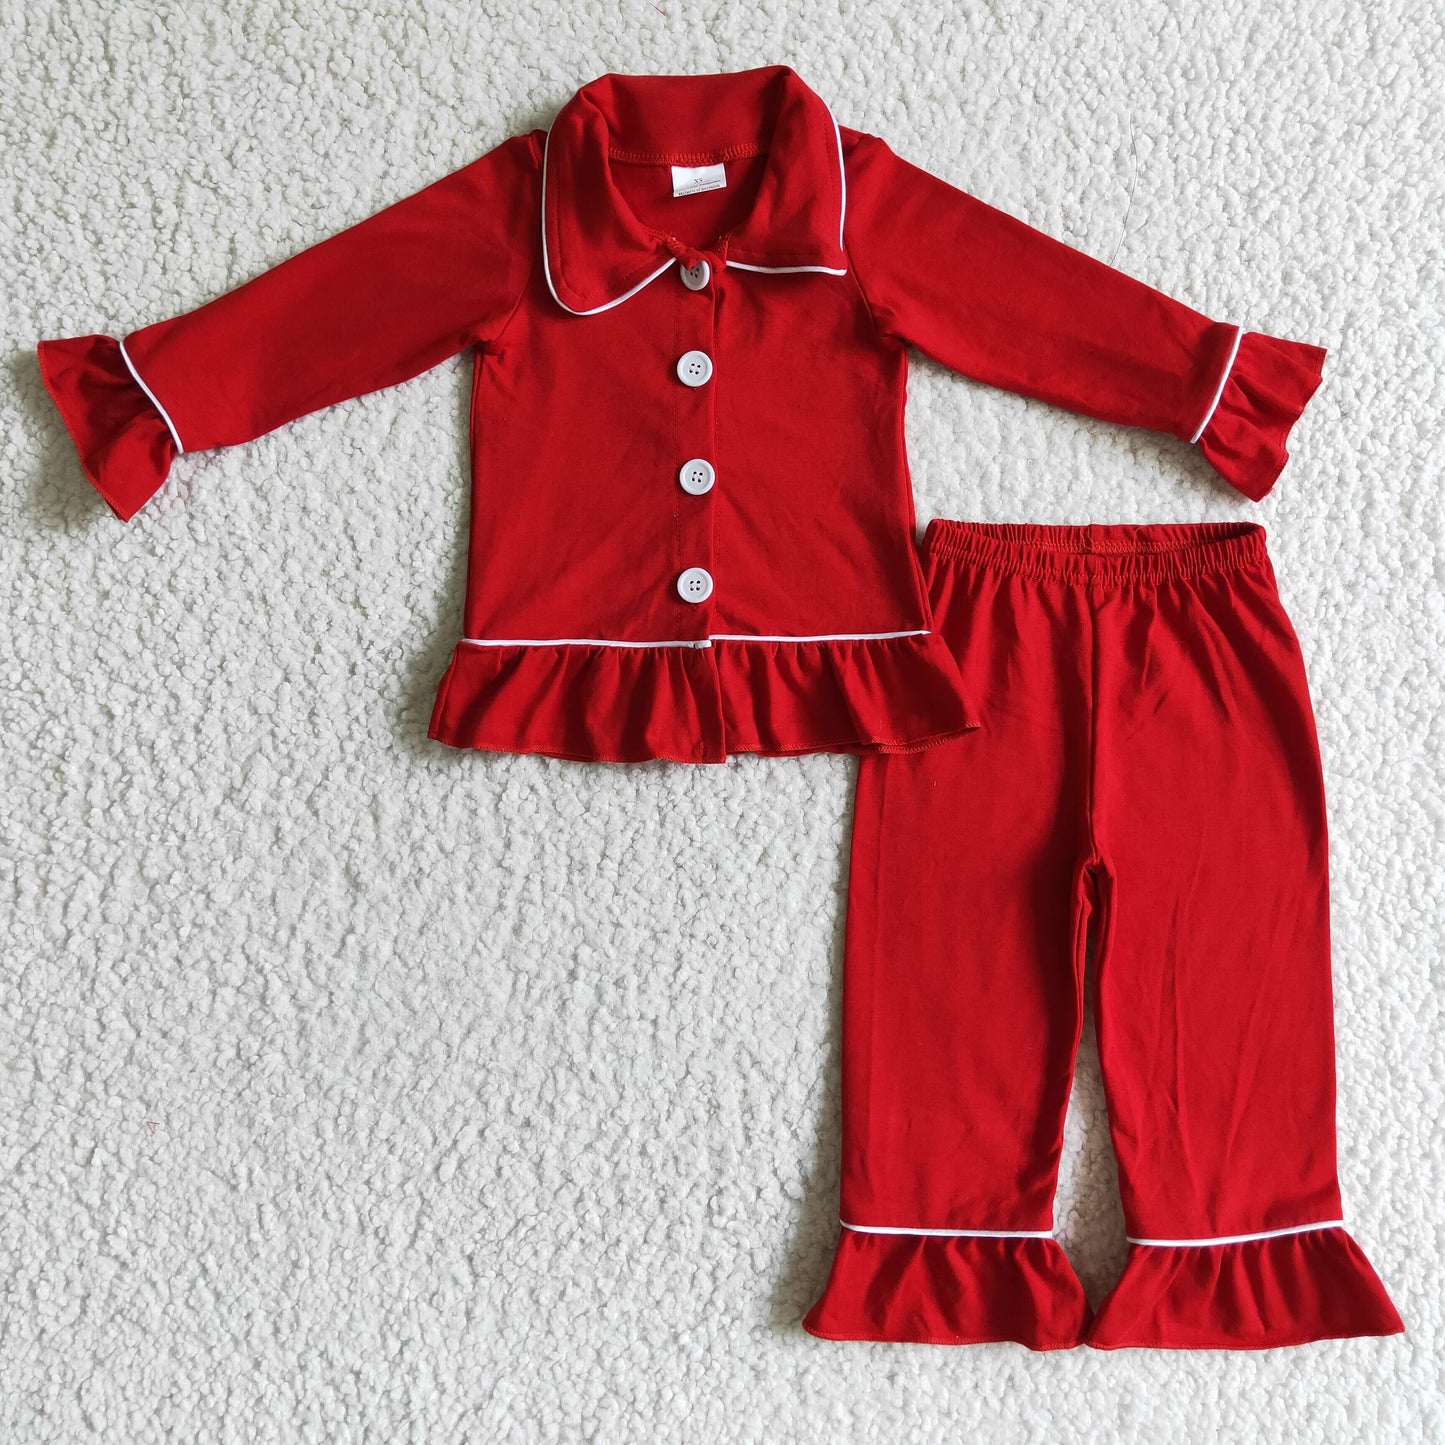 Red solid cotton sleepwear girls Christmas pajamas